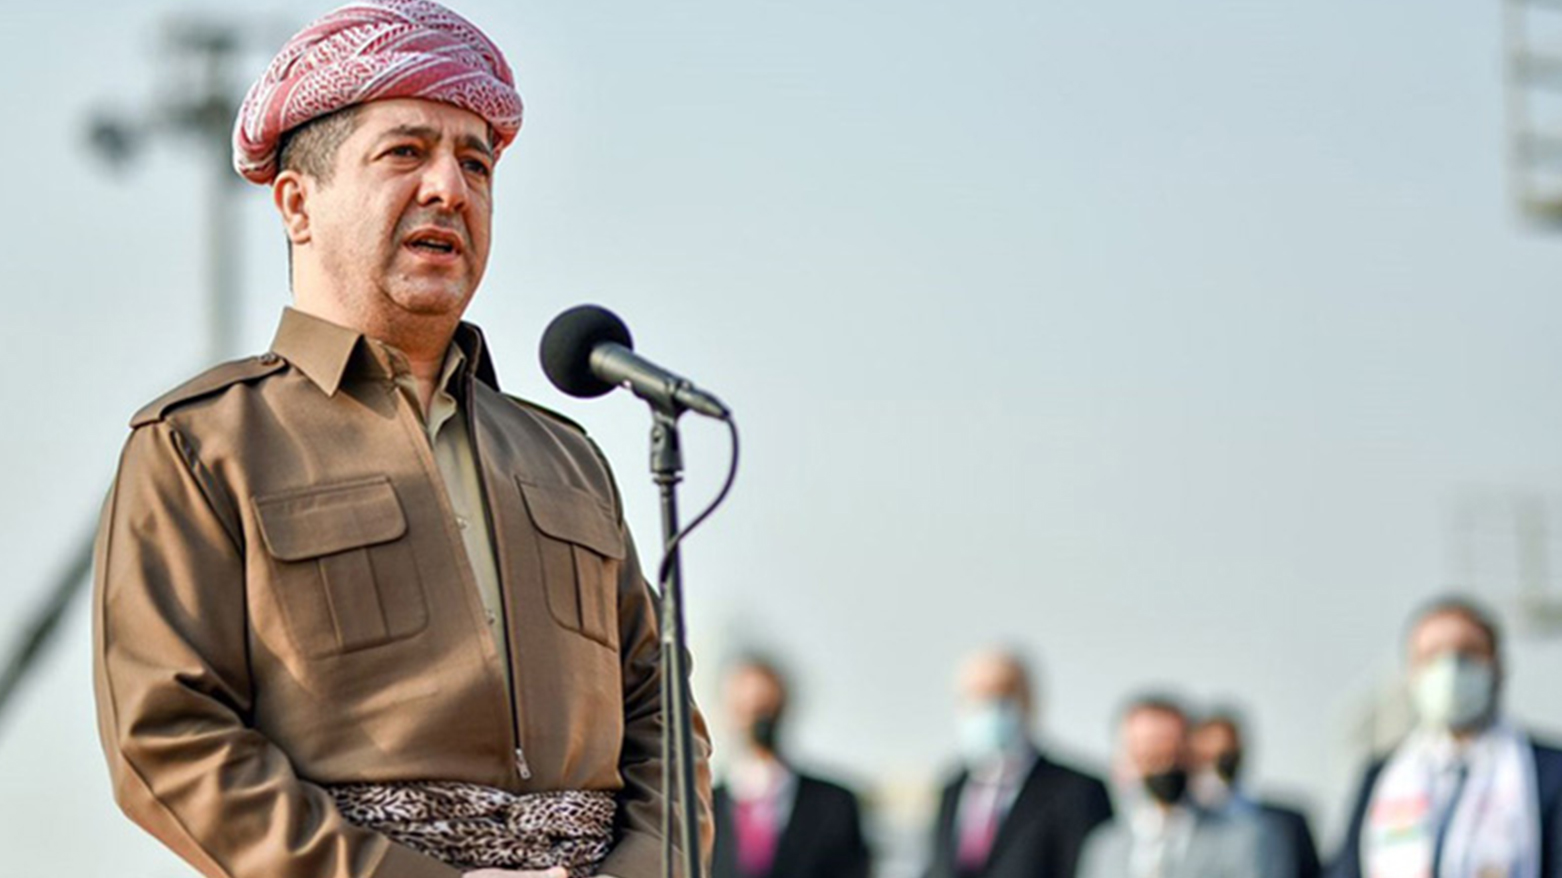 Newroz symbolizes standing up against oppressors says PM Barzani